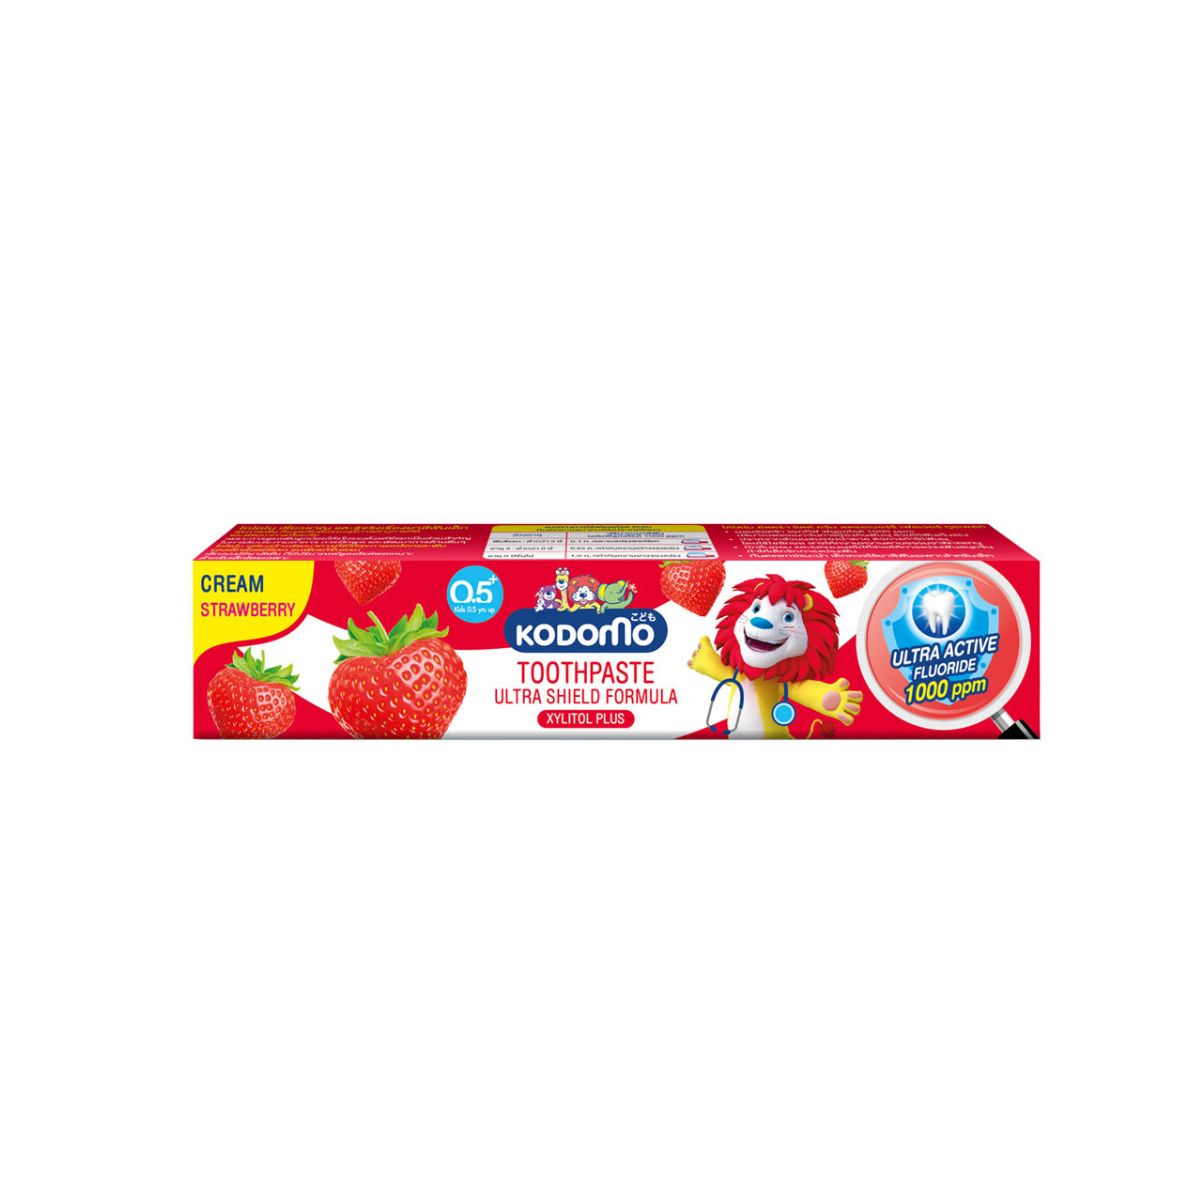 Kodomo Toothpaste Ultra Shield Formula - Xylitol Plus - Cream Strawberry